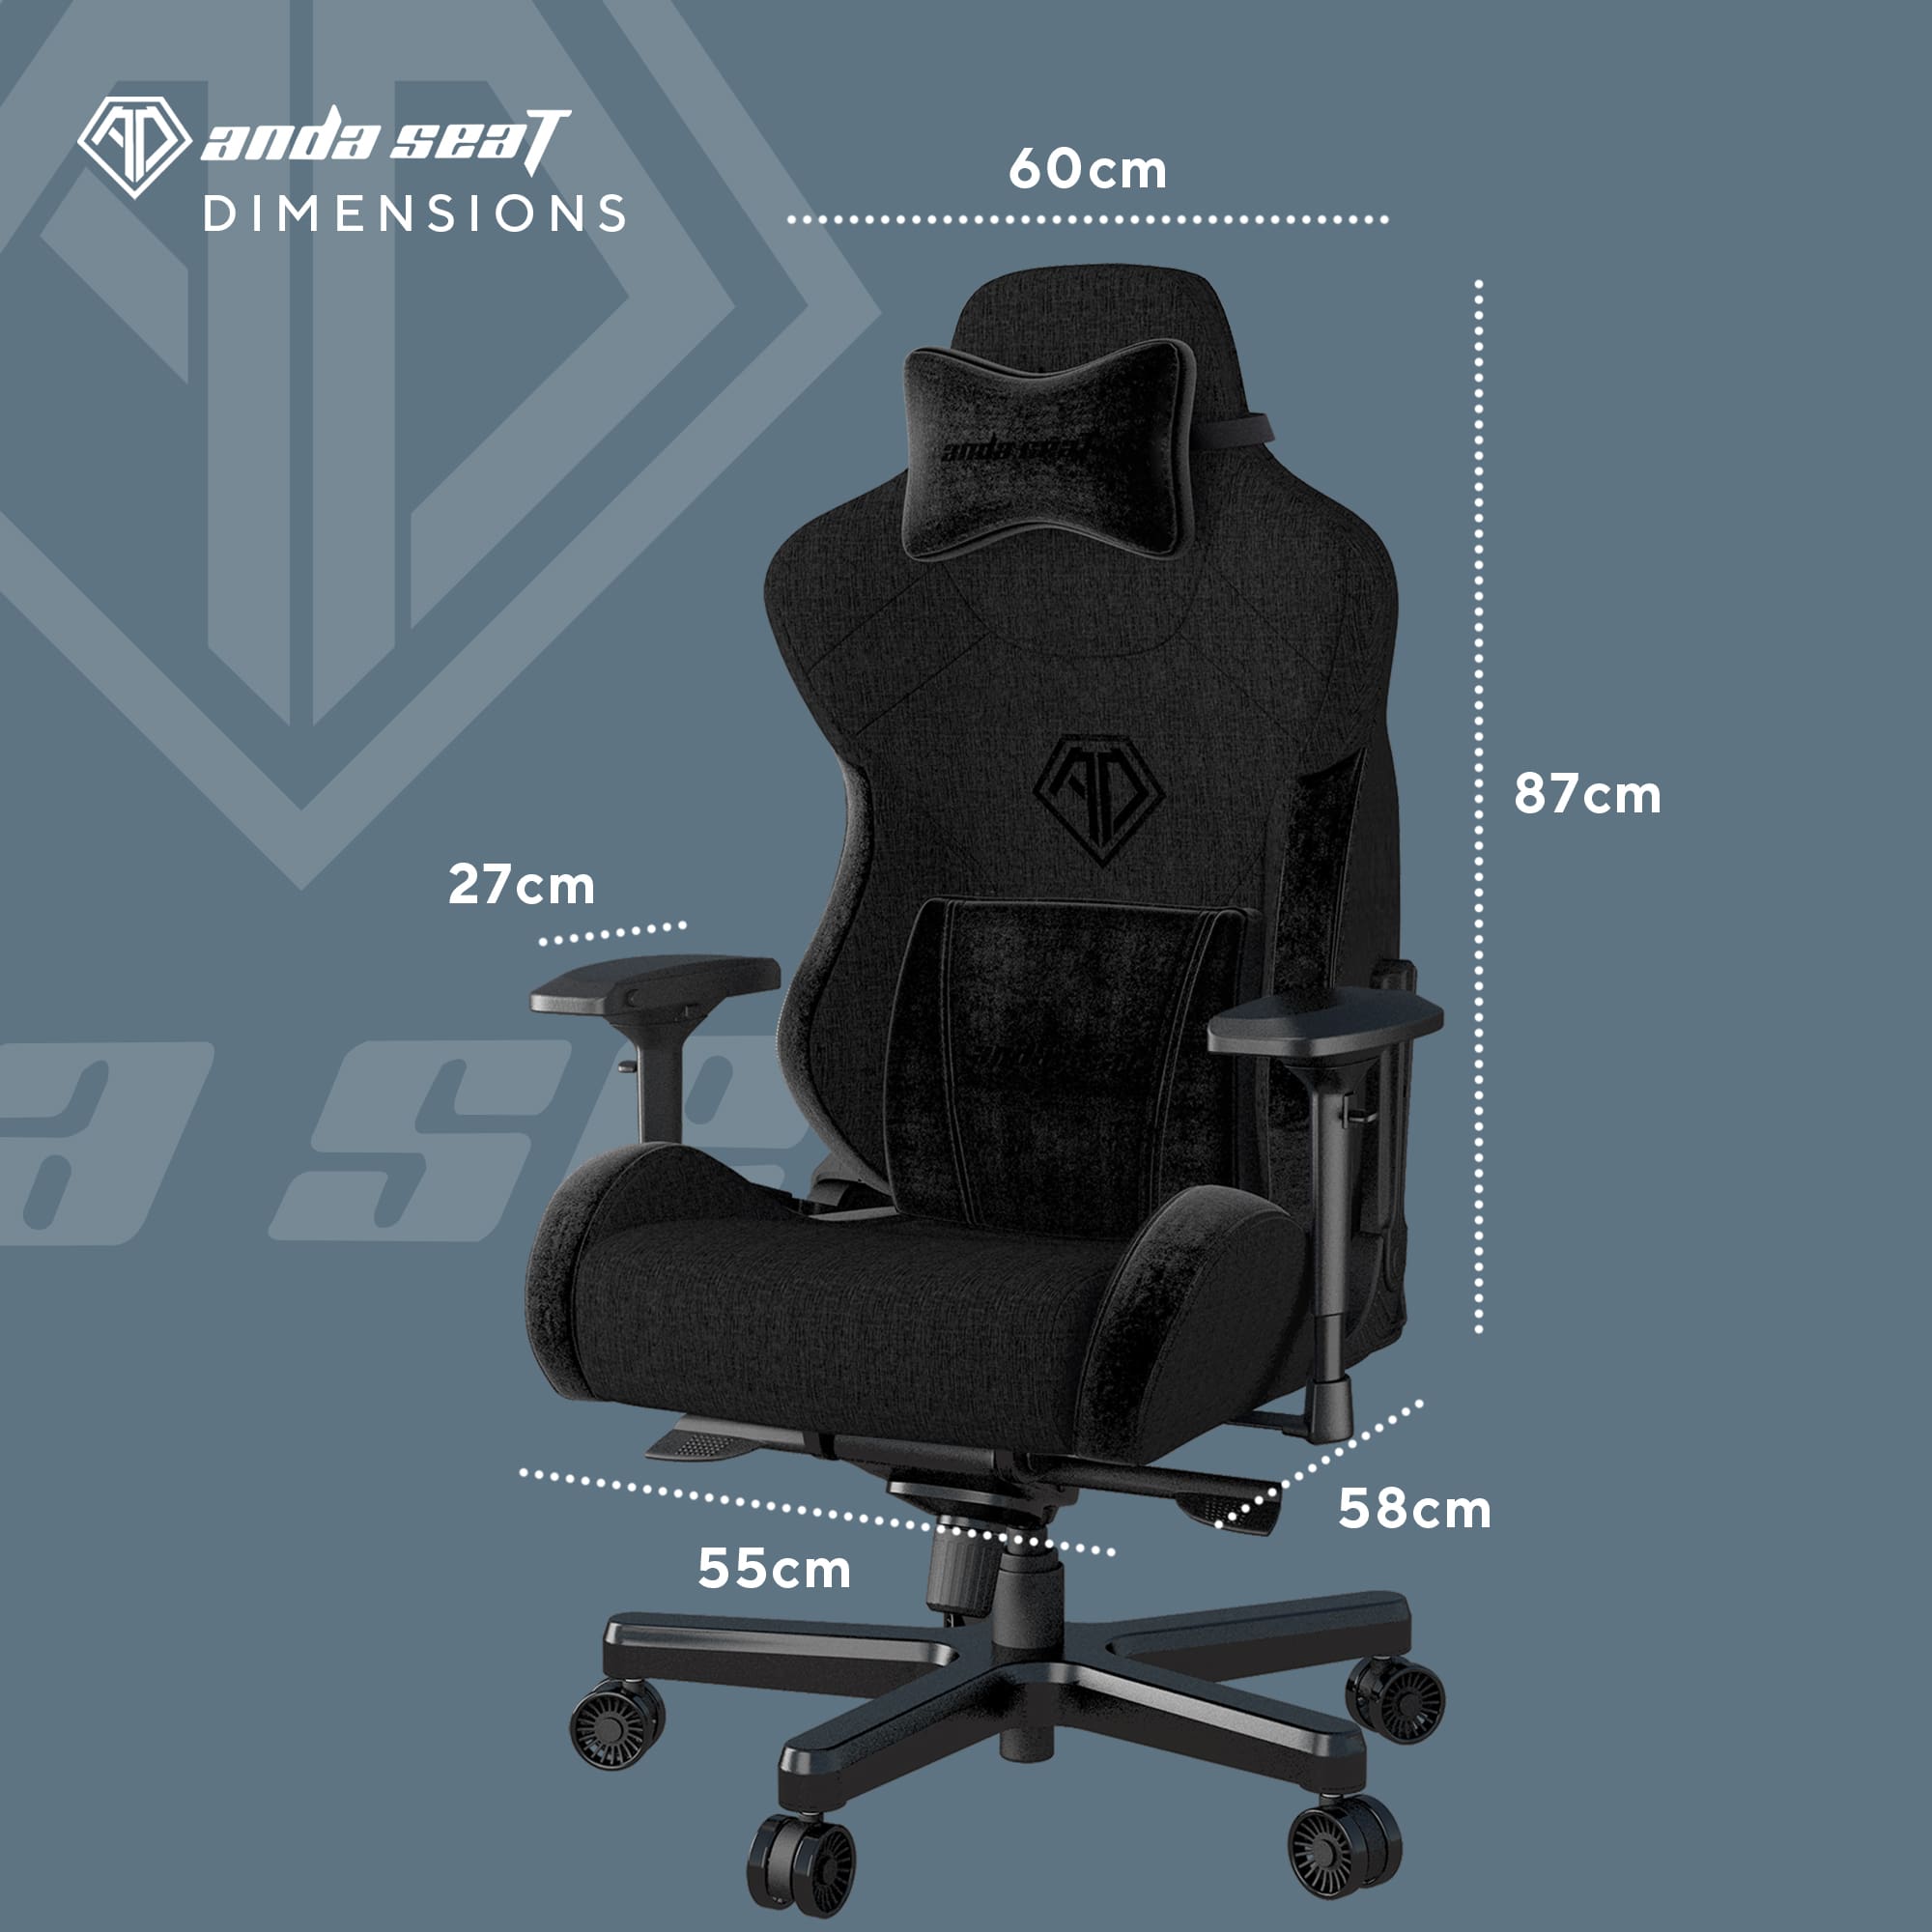 Anda Seat T-Pro 2 Black Gaming Chair